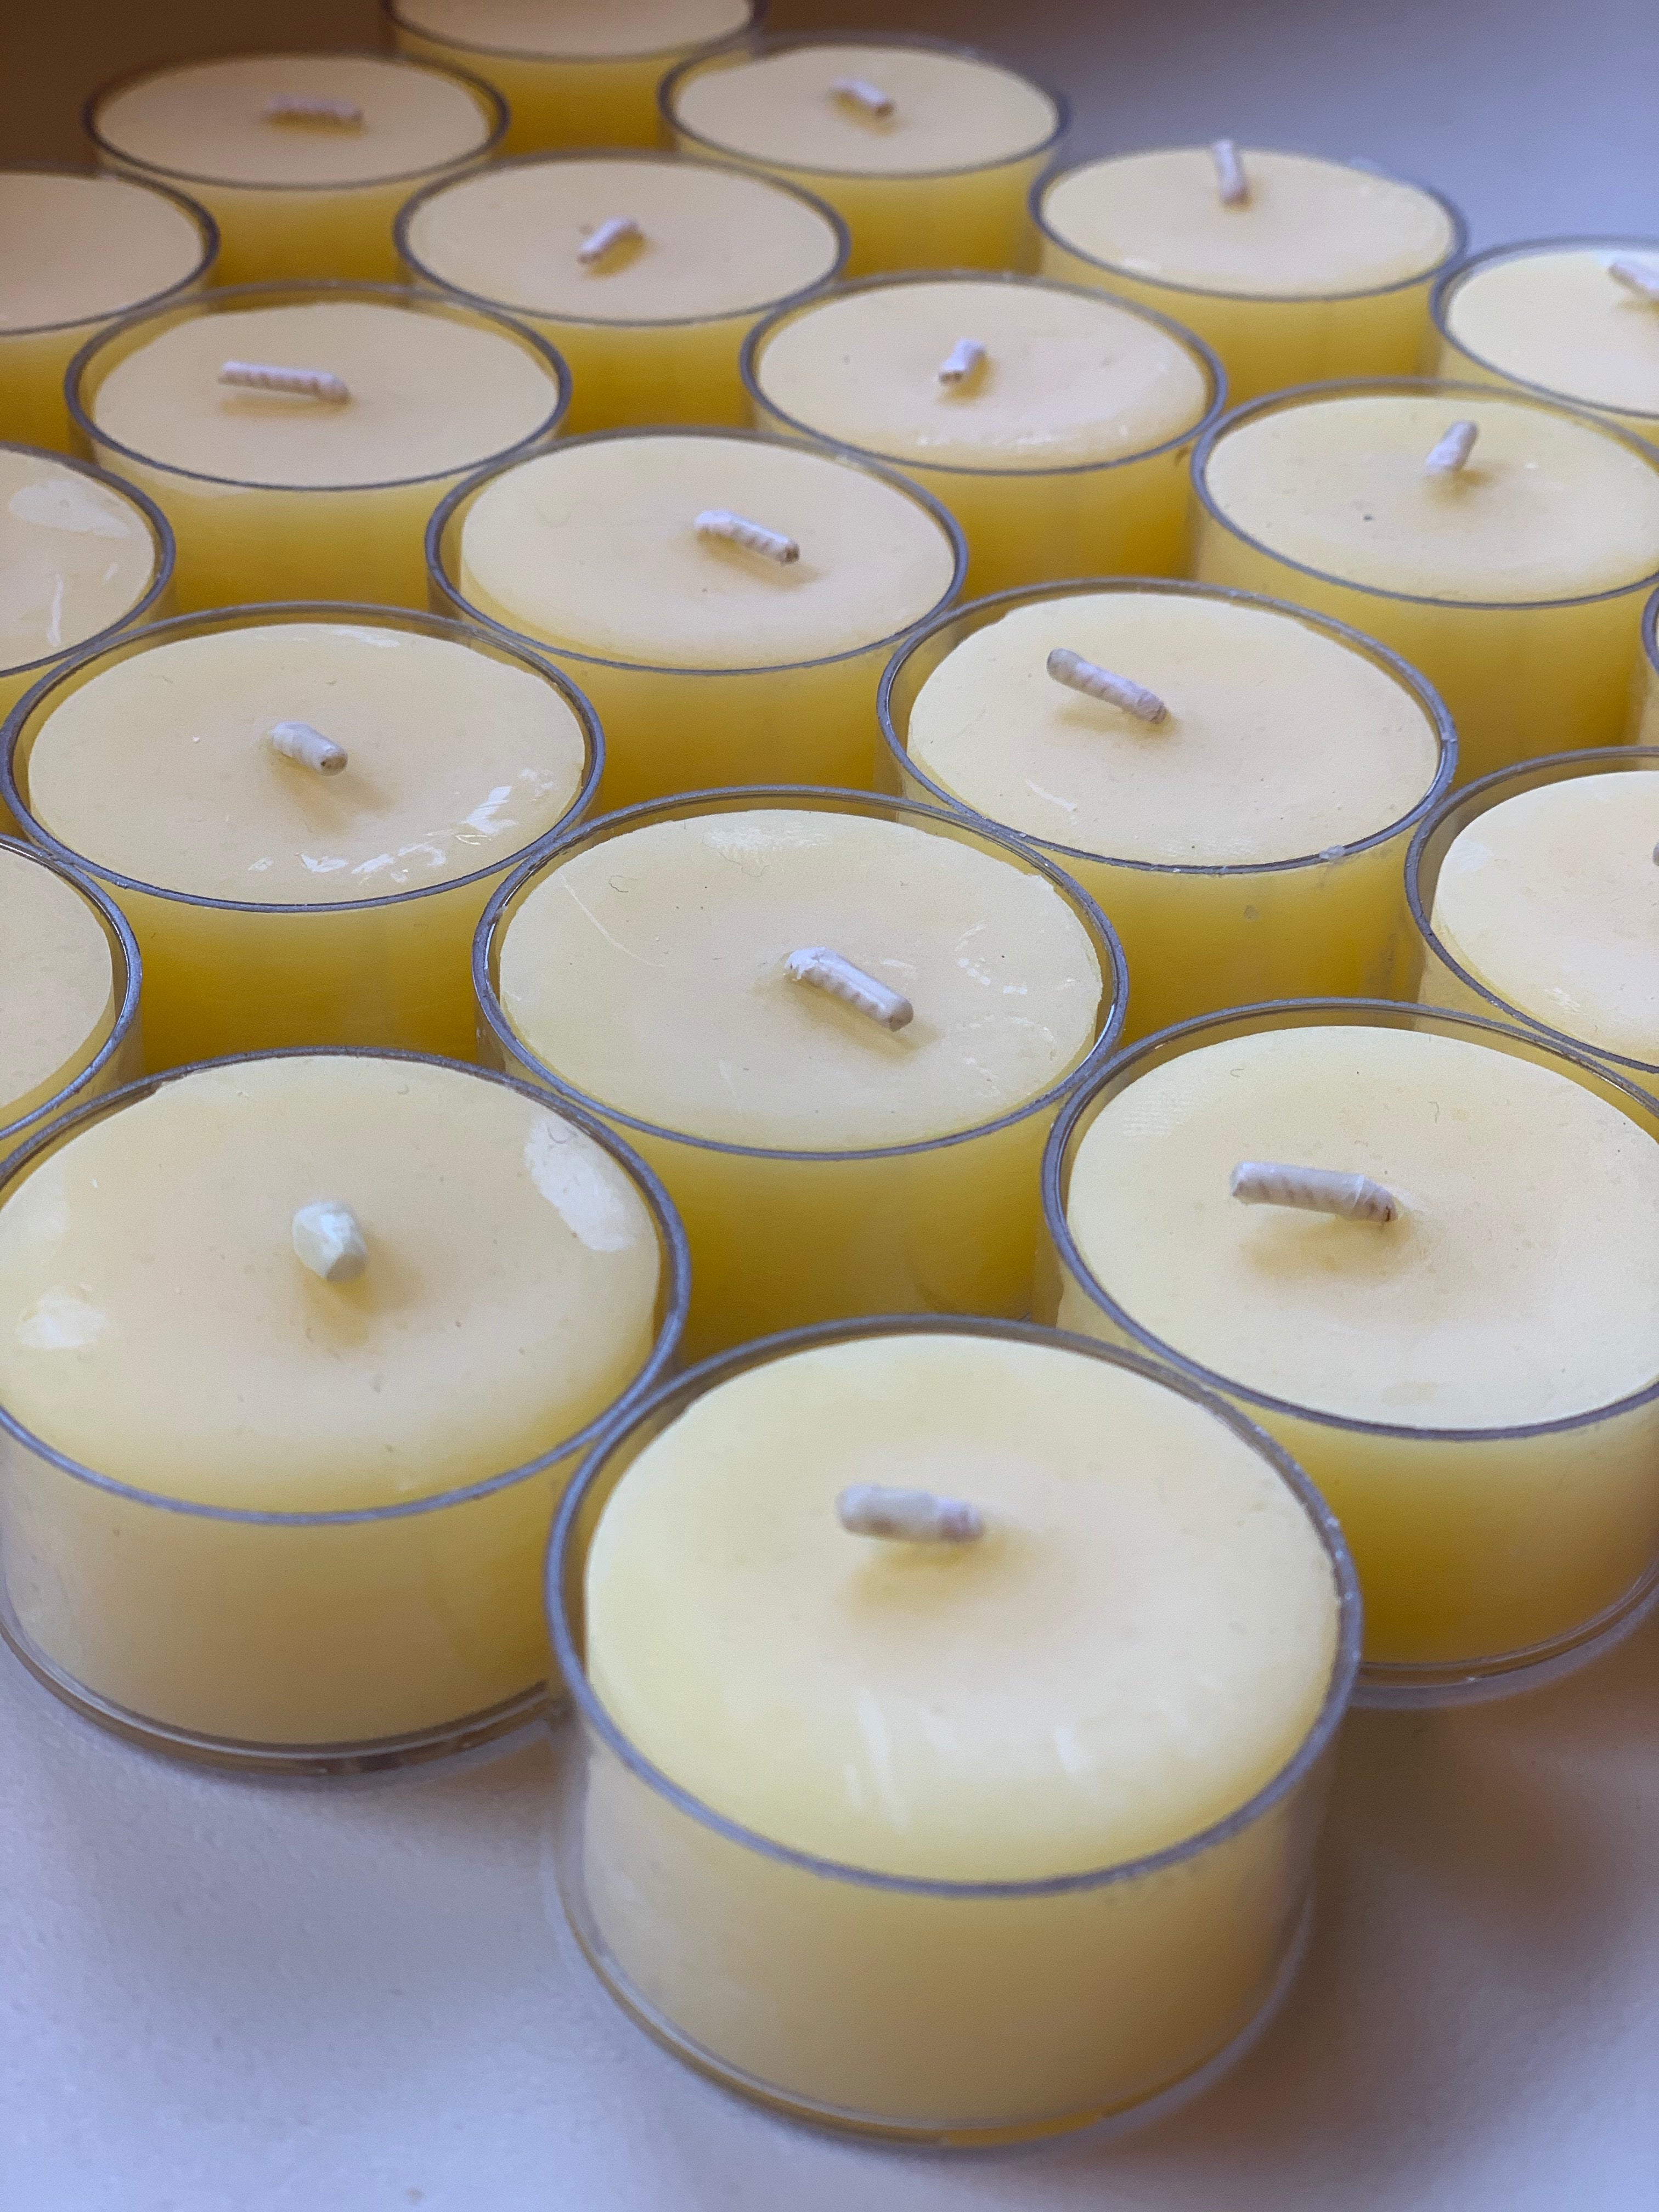 Handmade Beeswax Candles